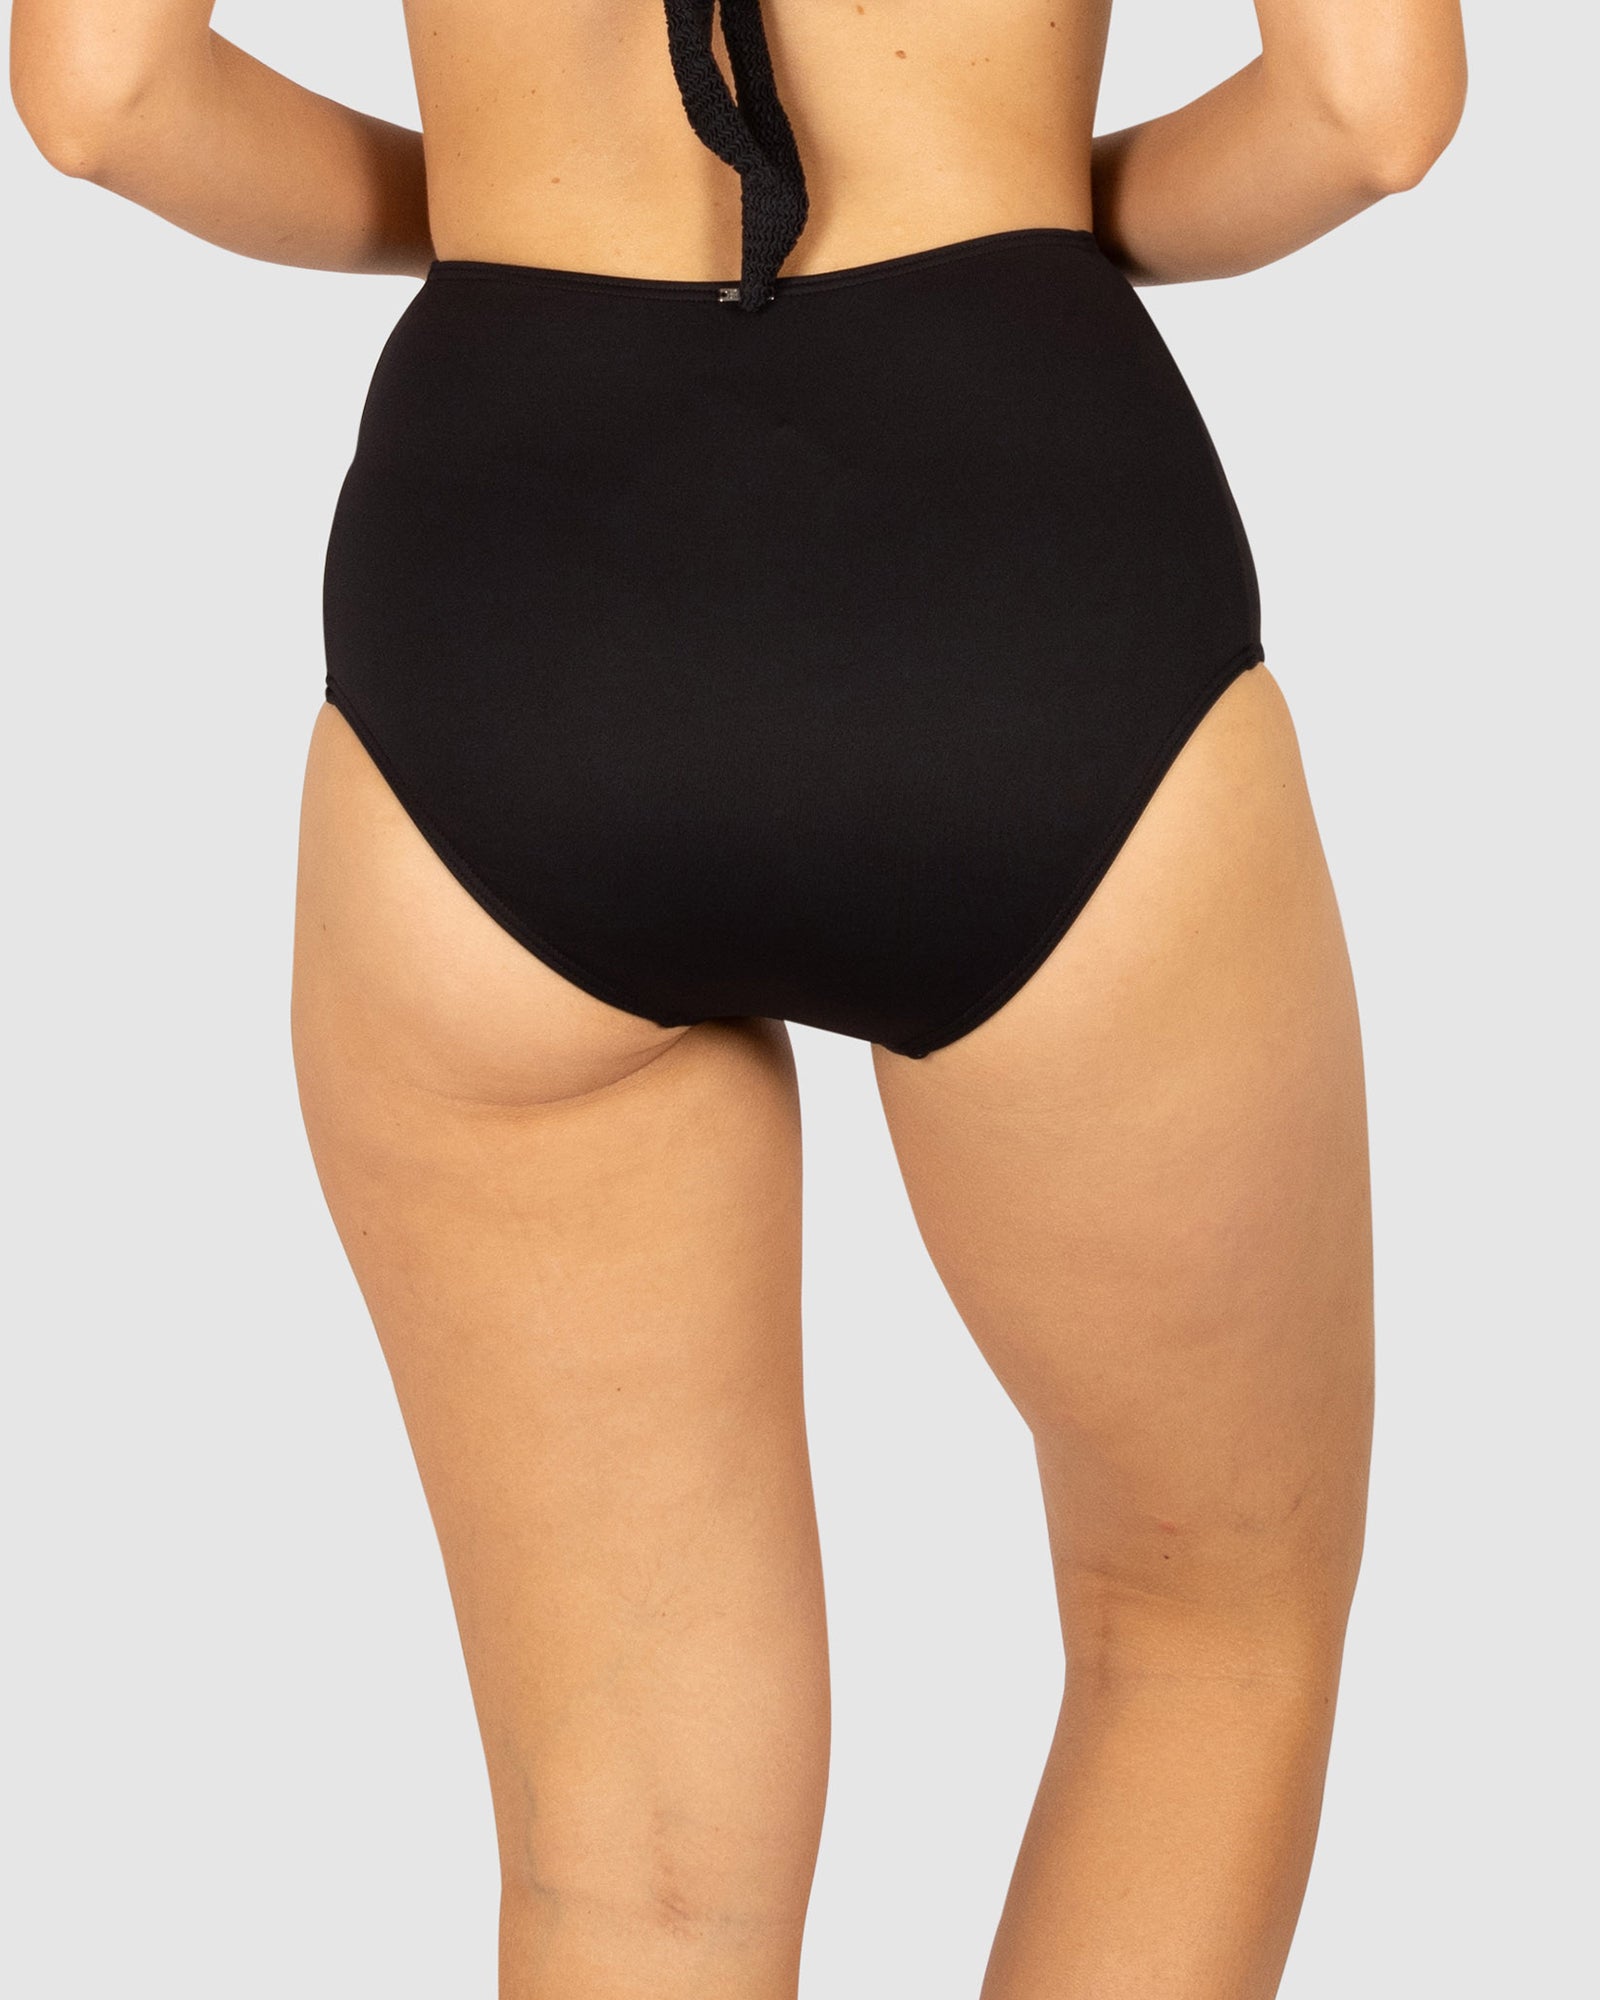 Chloro-Resist Ultra High Waist Bikini Bottom